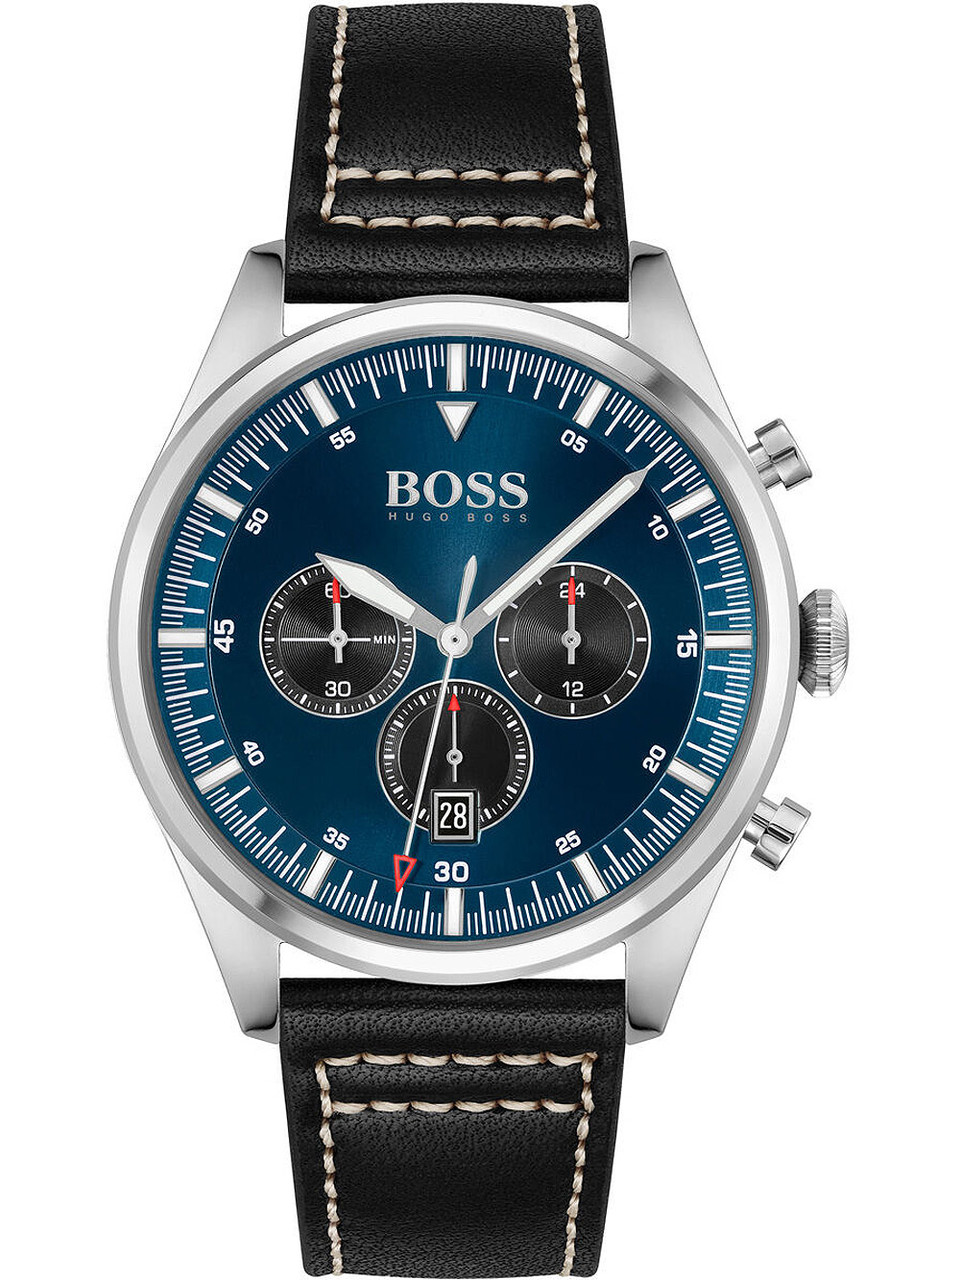 Hugo Boss 1513866 owlica chrono Pioneer - 44mm Genuine Watches | 5ATM